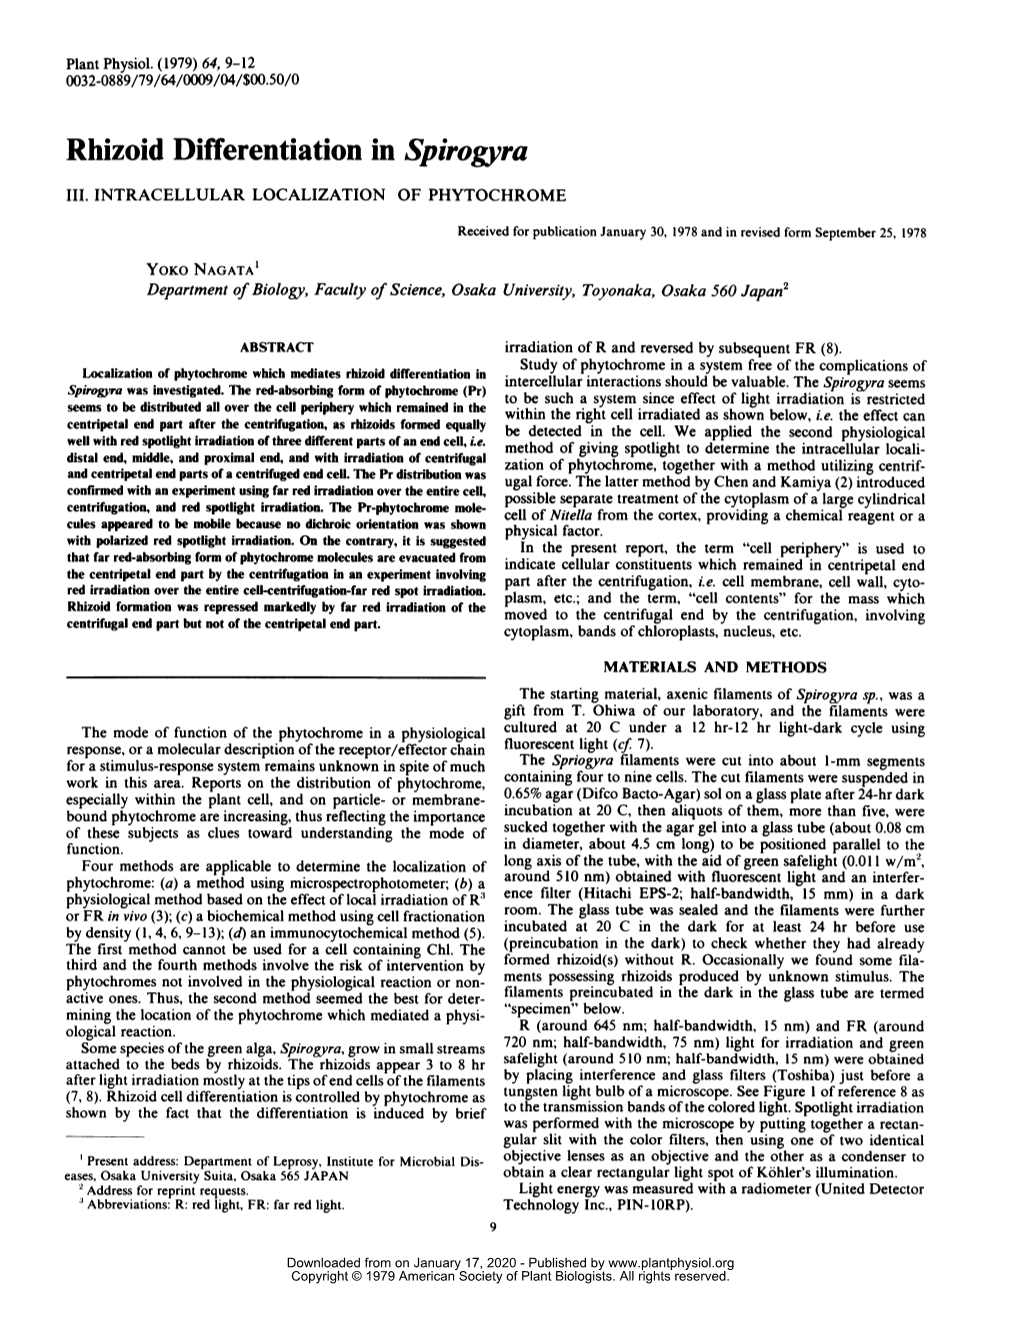 Rhizoid Differentiation in Spirogyra III